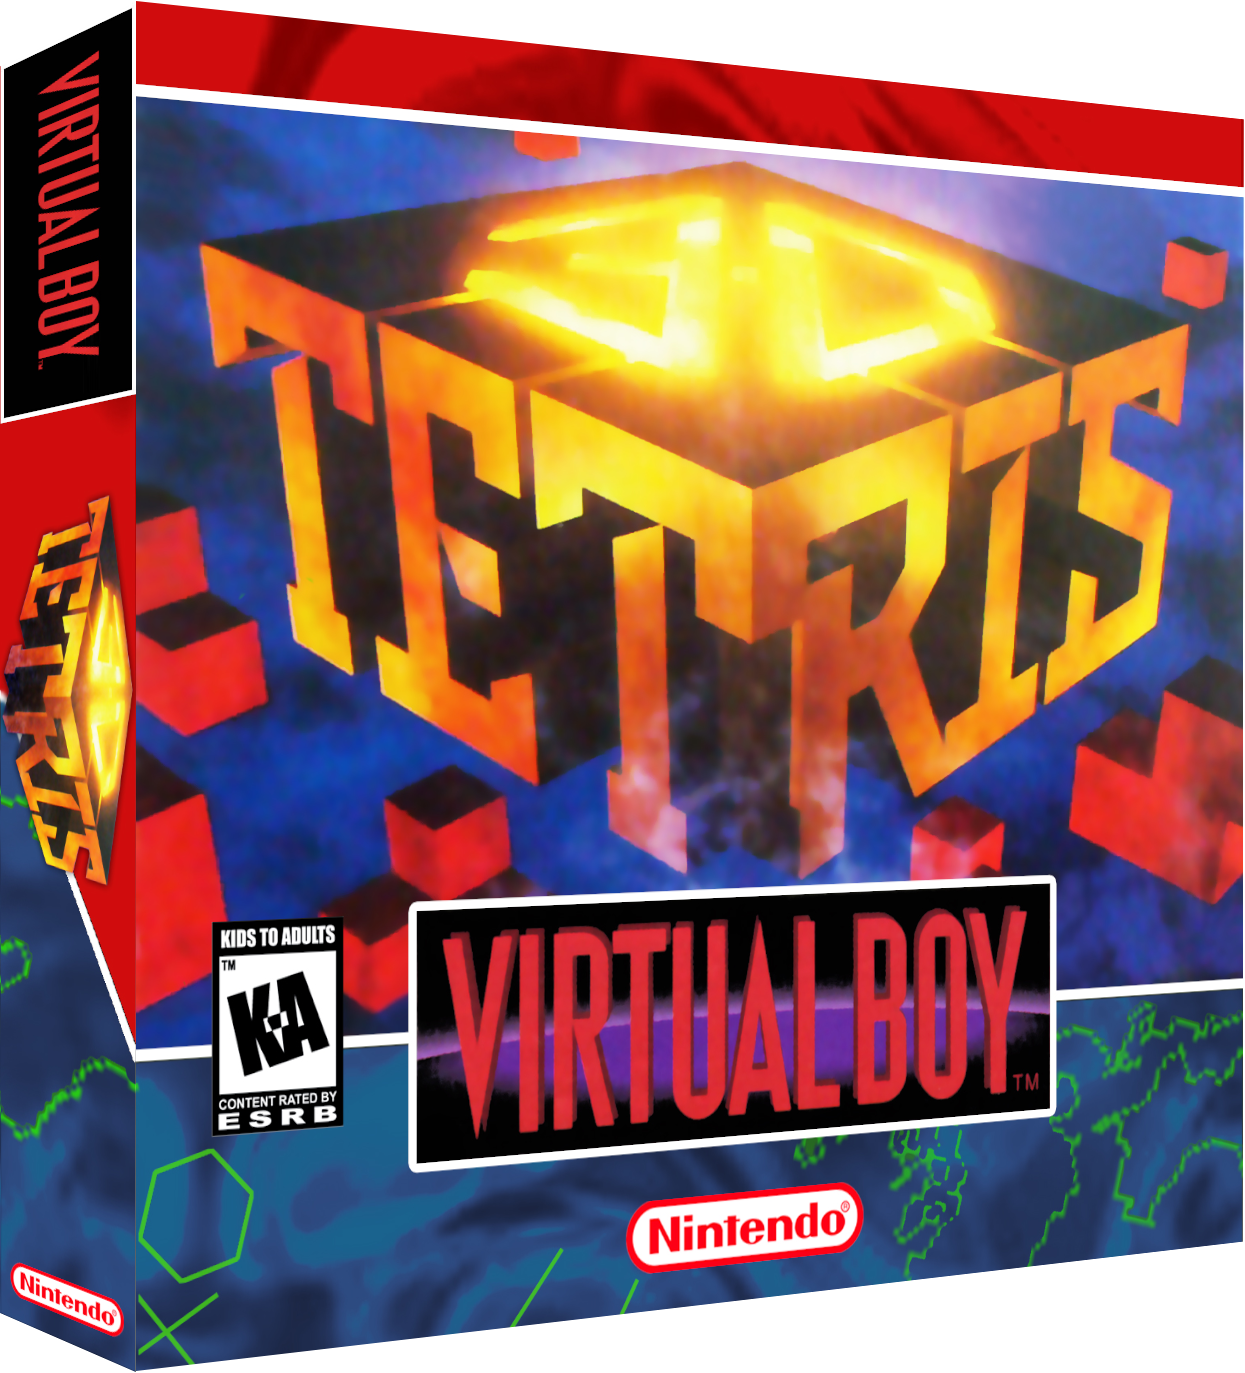 More information about "Nintendo Virtual Boy 3D Boxes (28)"